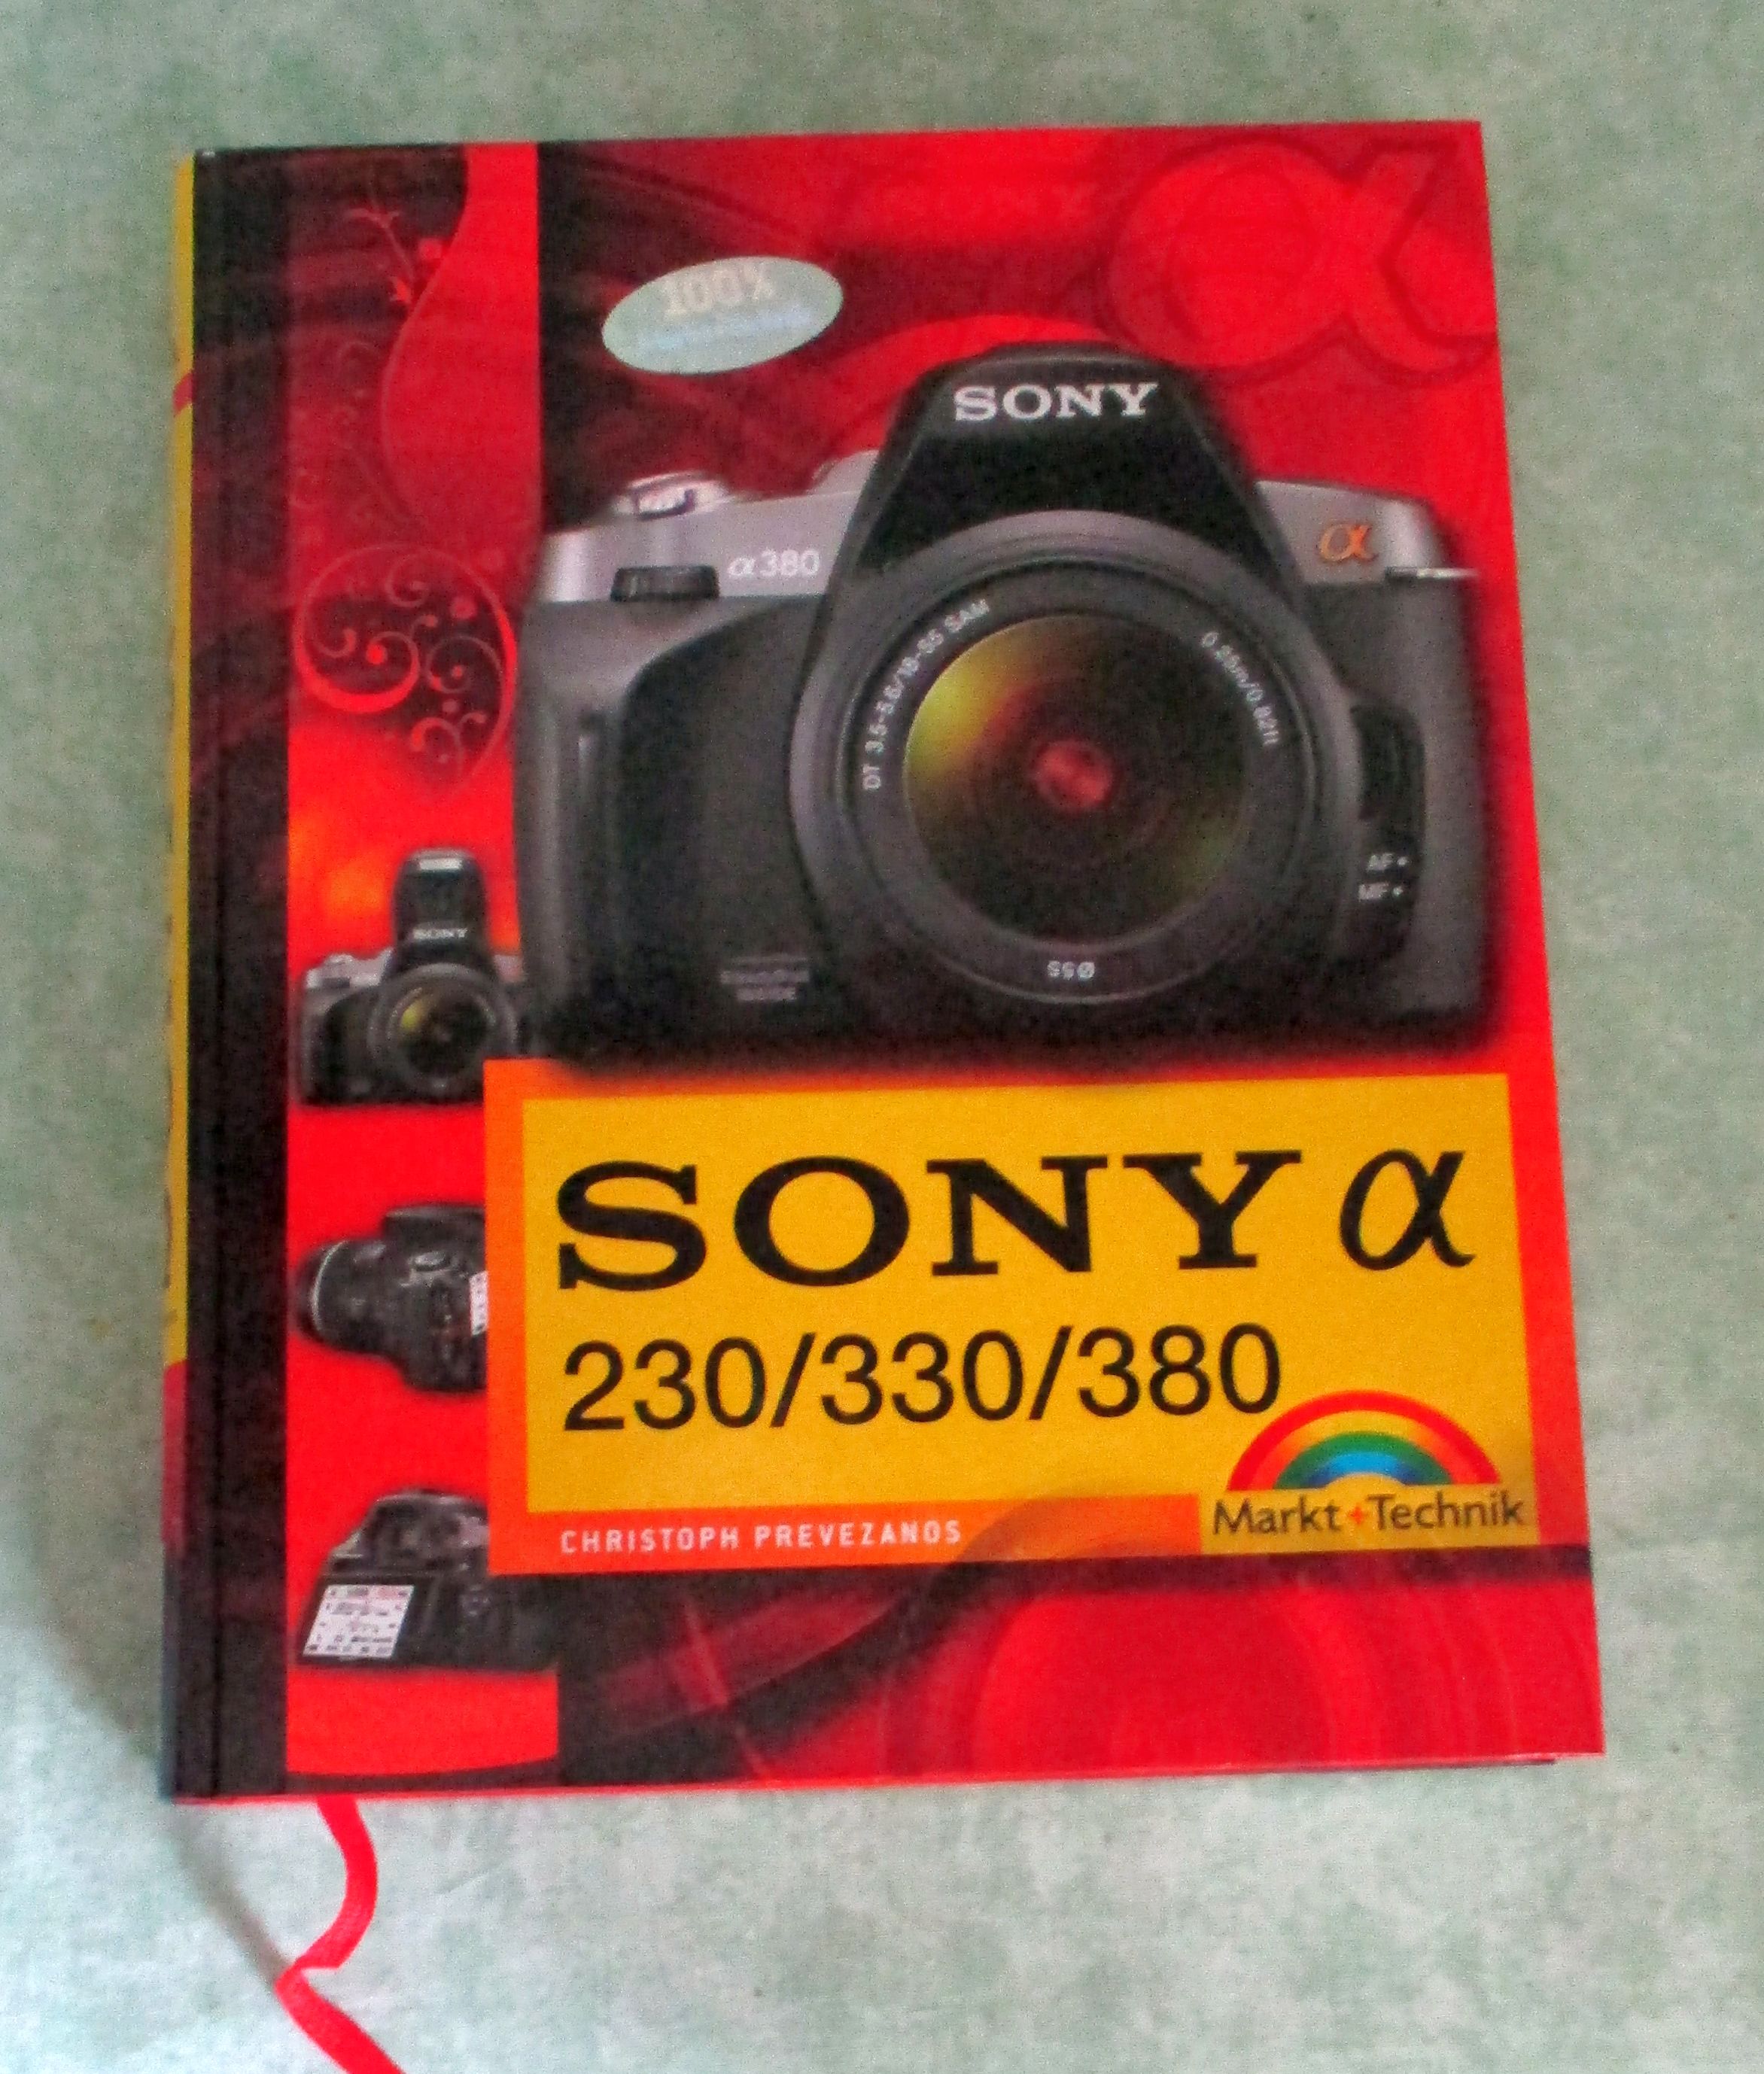 Sony Alpha 230/330/380. - Fotografie Prevezanos, Christoph.